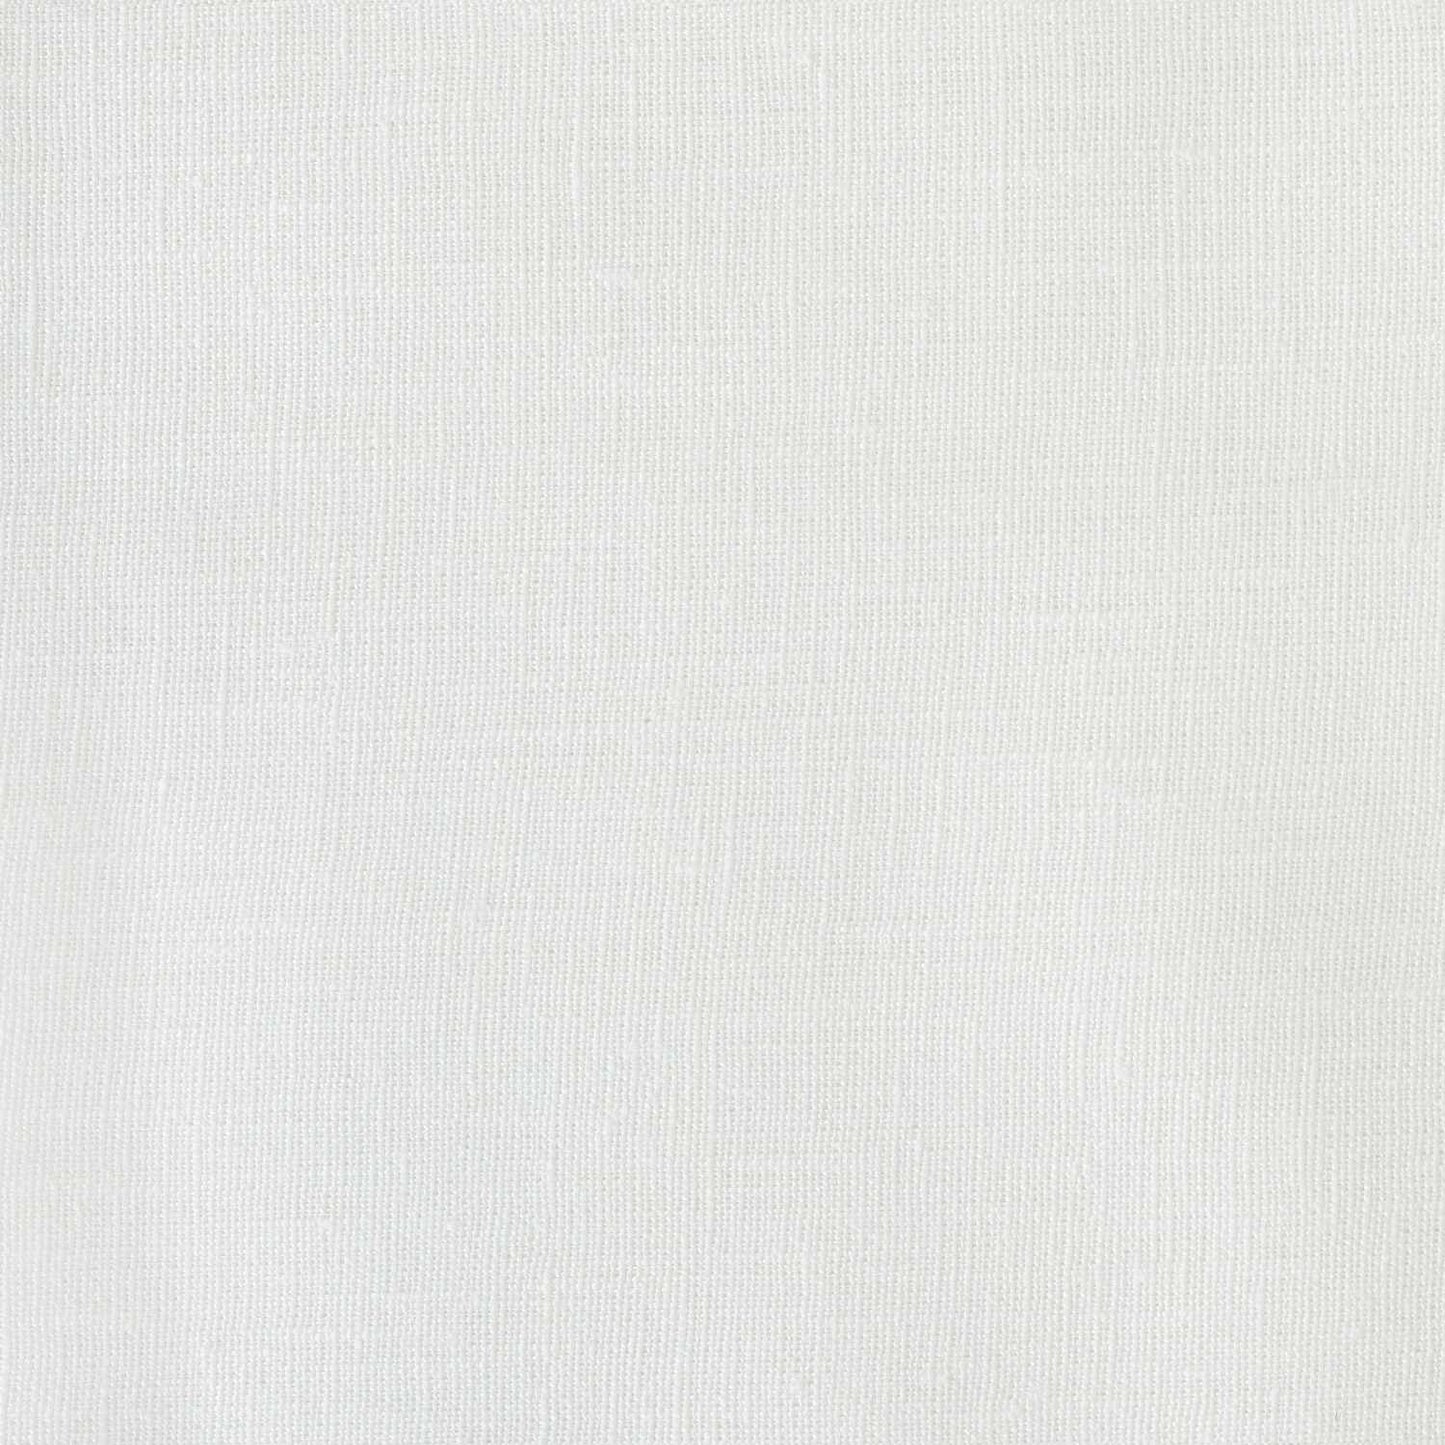 Off White Cotton/Linen